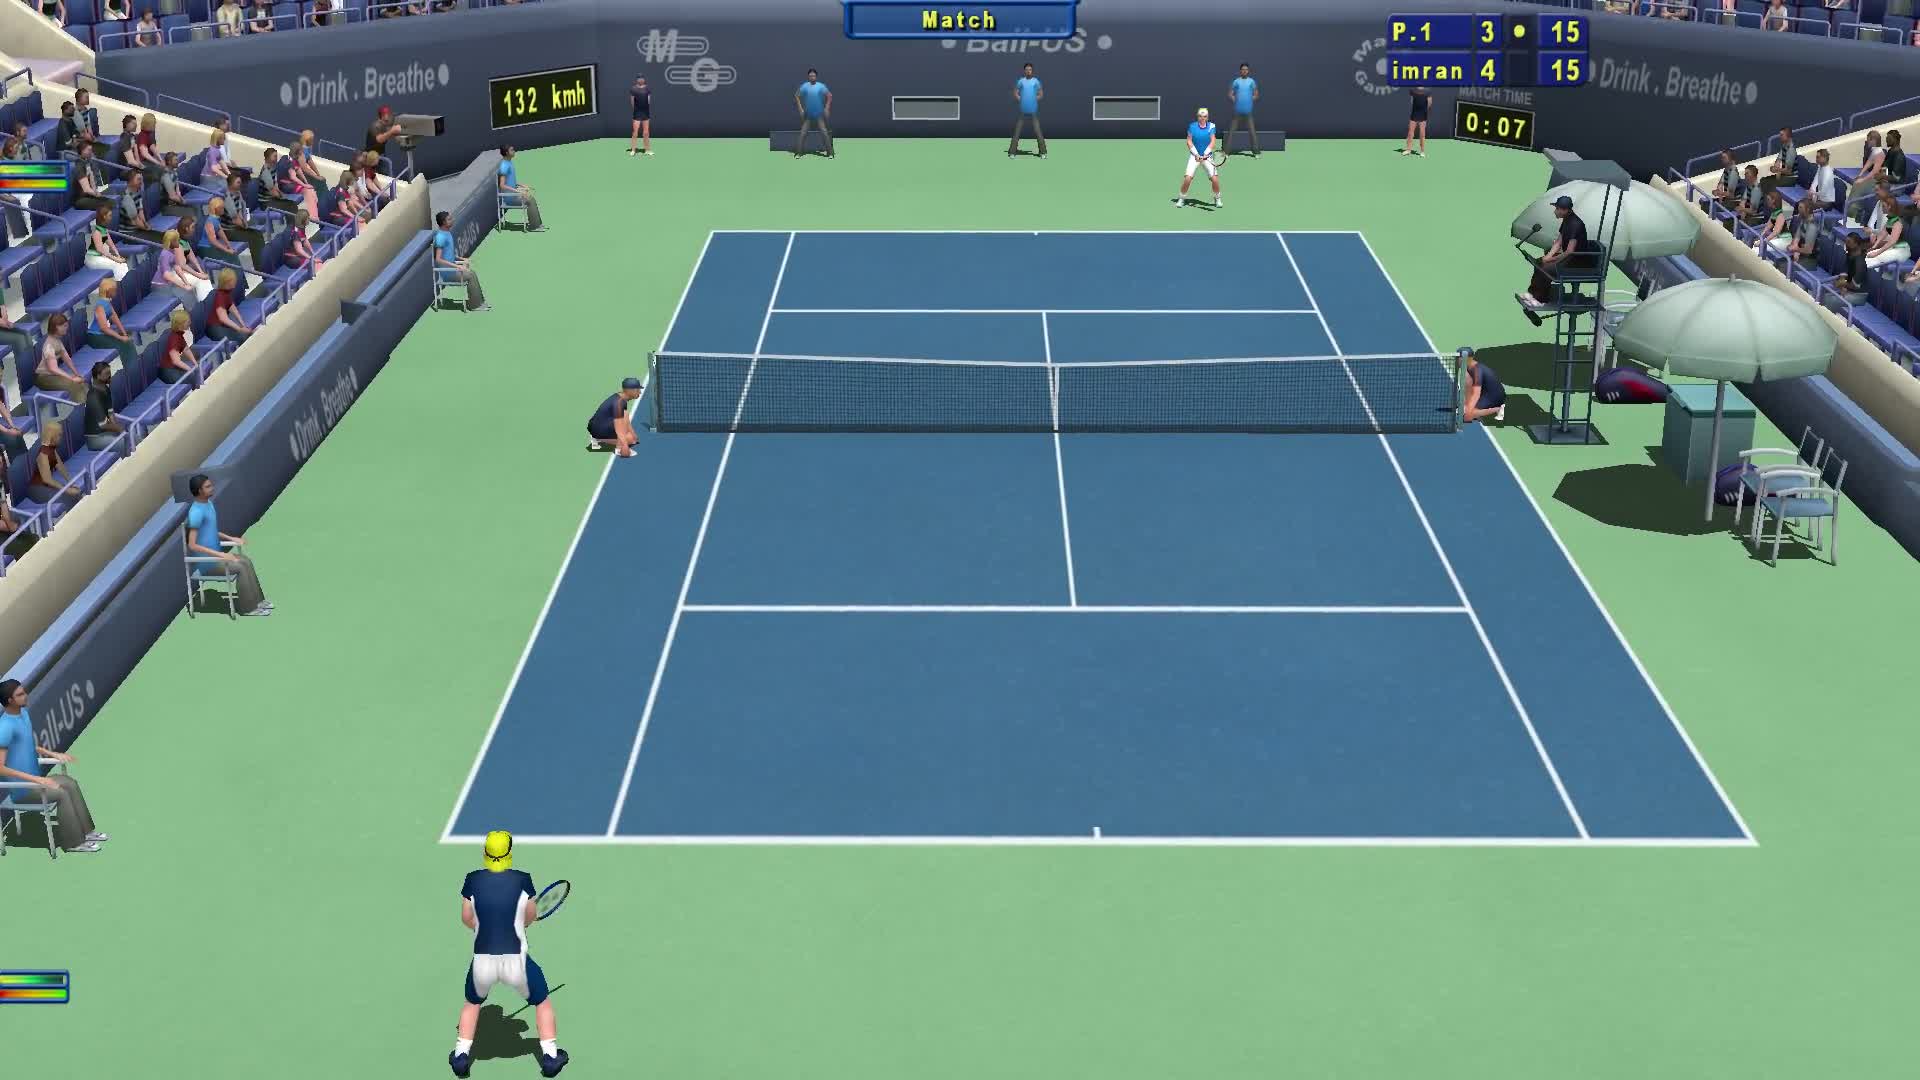 Tennis Elbow 2013 - Online Match video